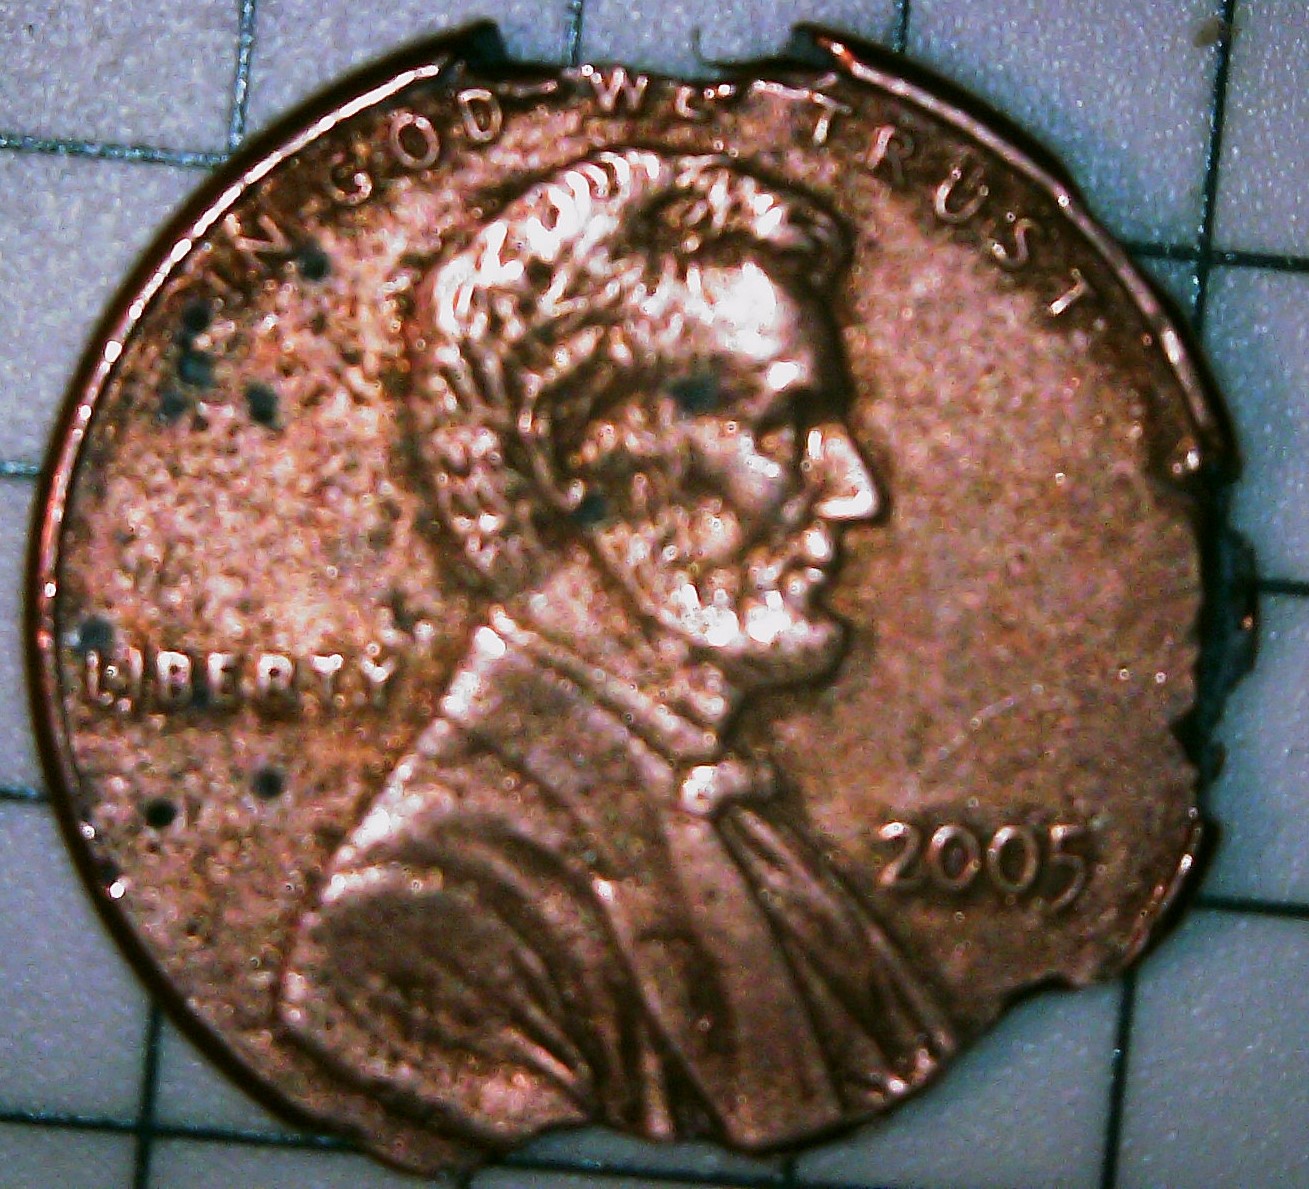 2005 damaged cent obv.jpg